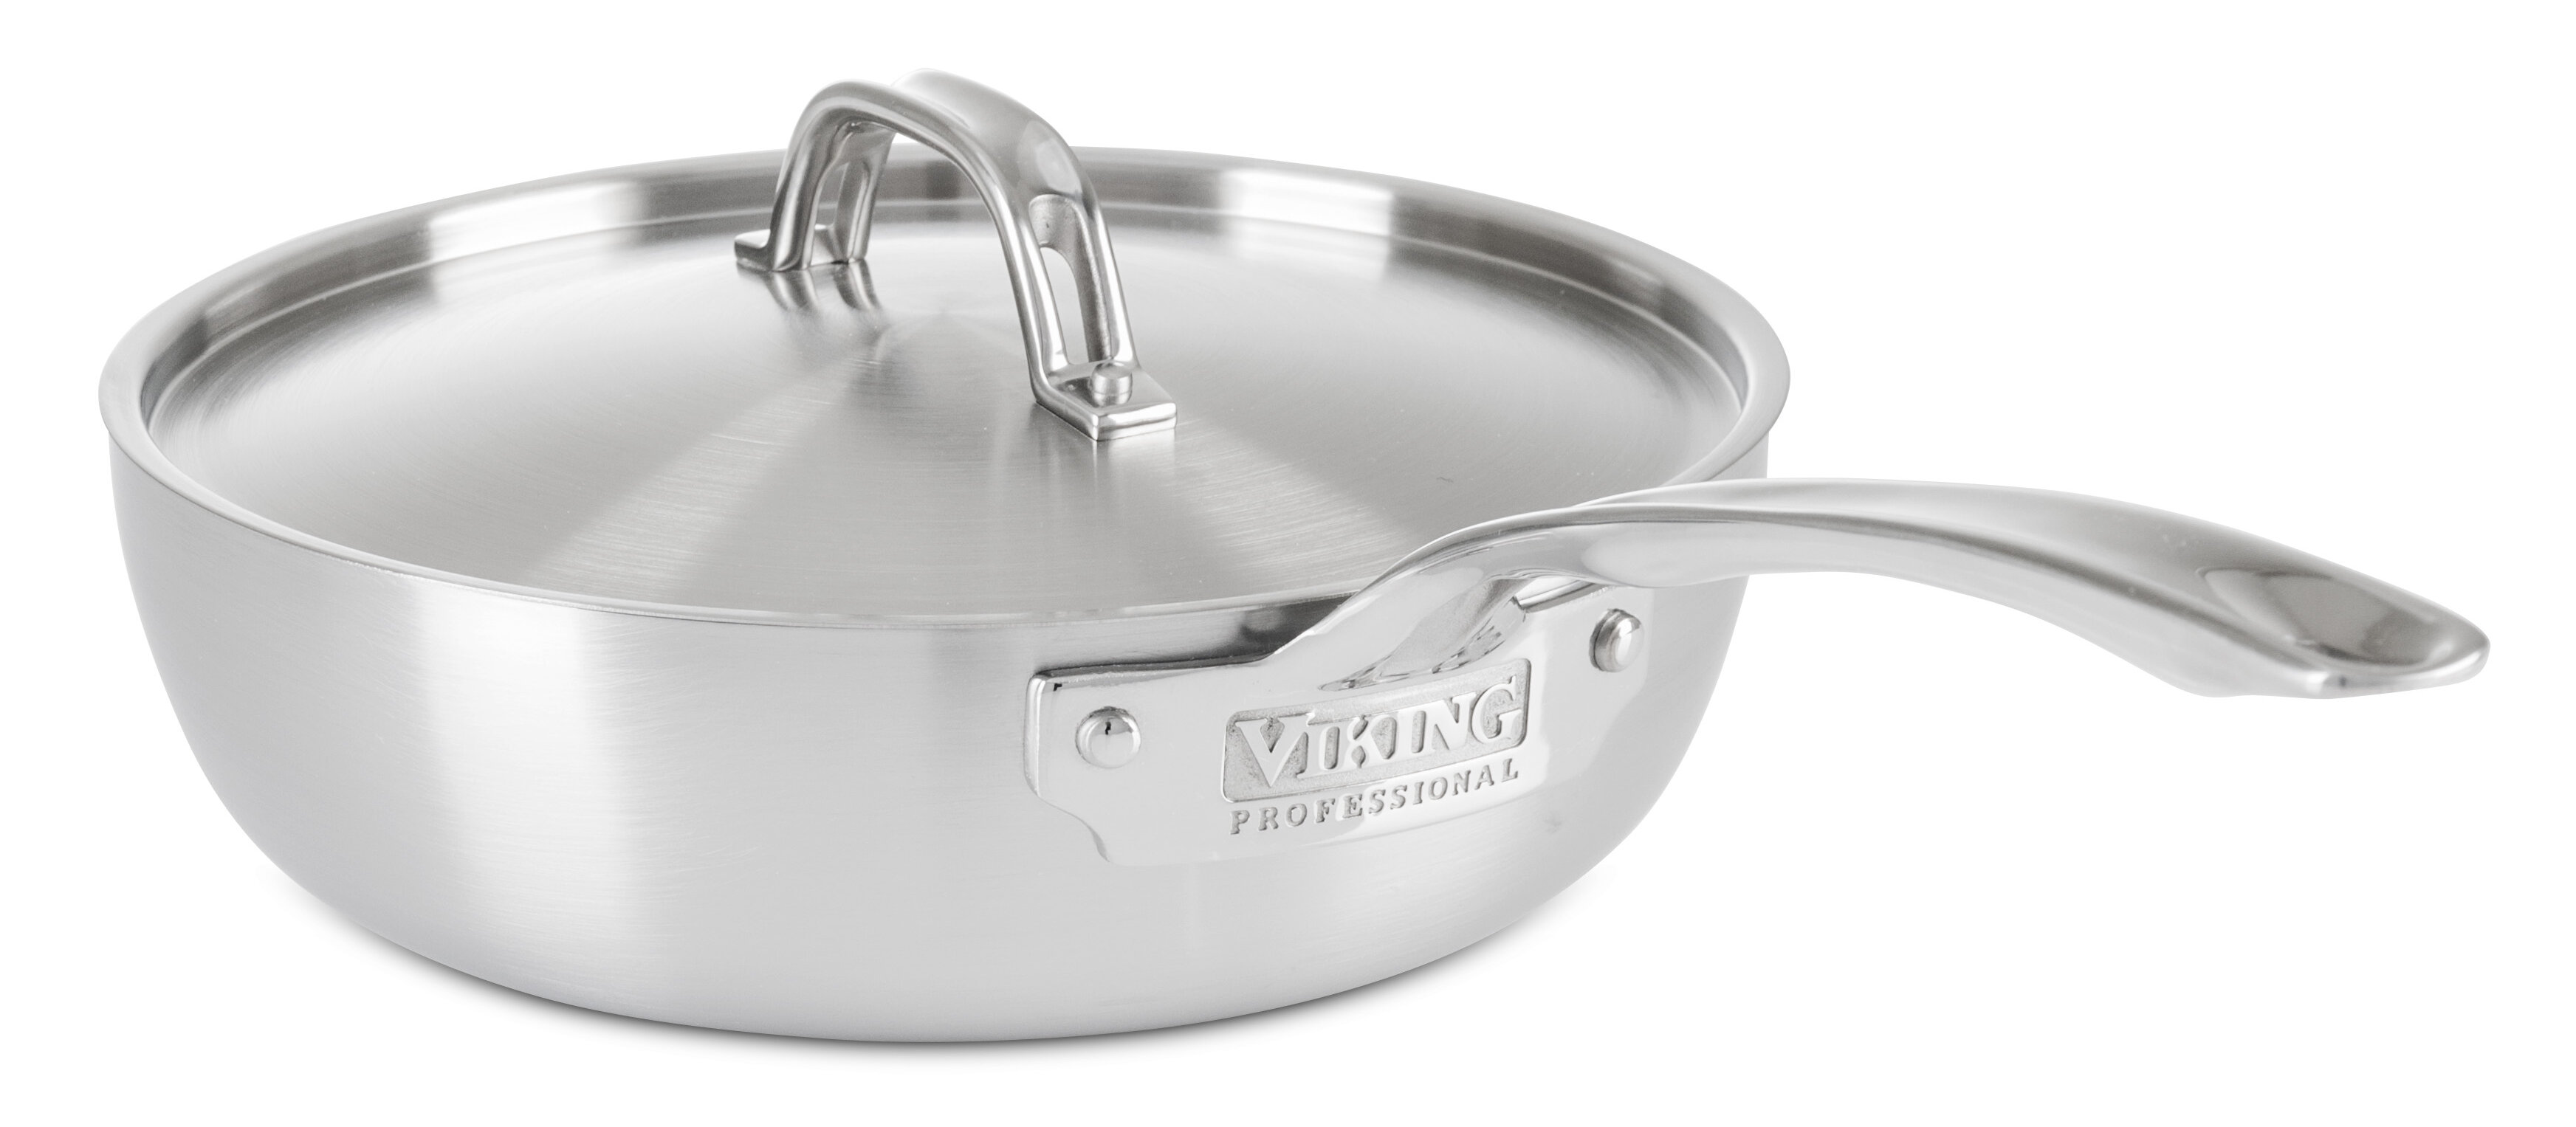 Viking Contemporary 3-Ply 2.4 Quart Sauce Pan